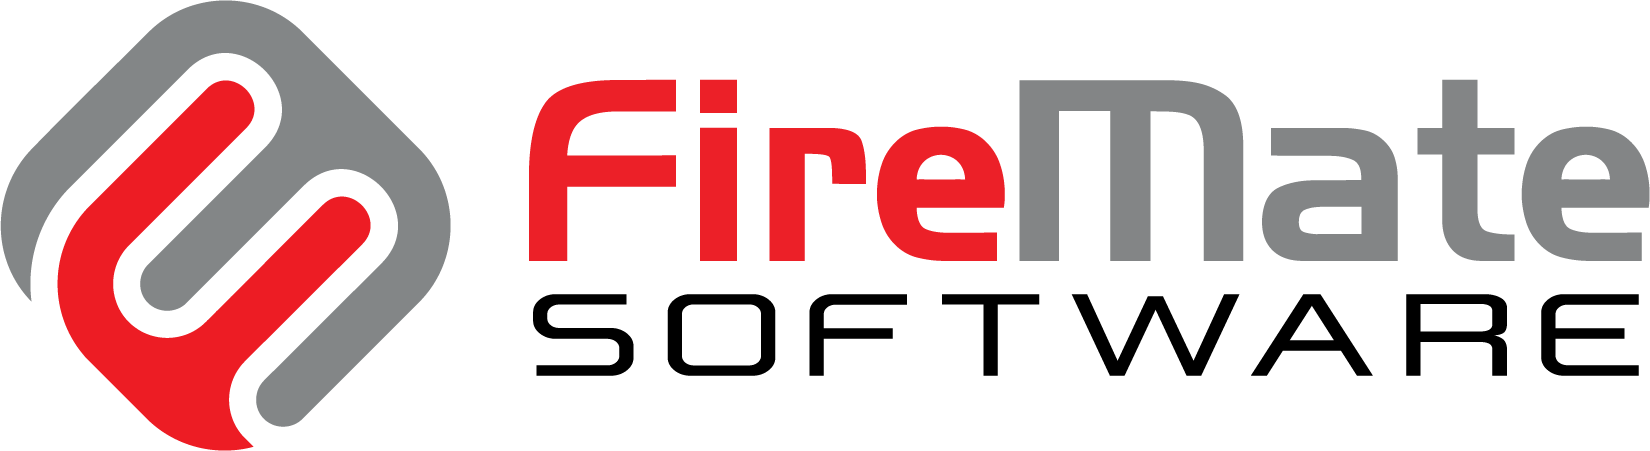 FireMate Ltd